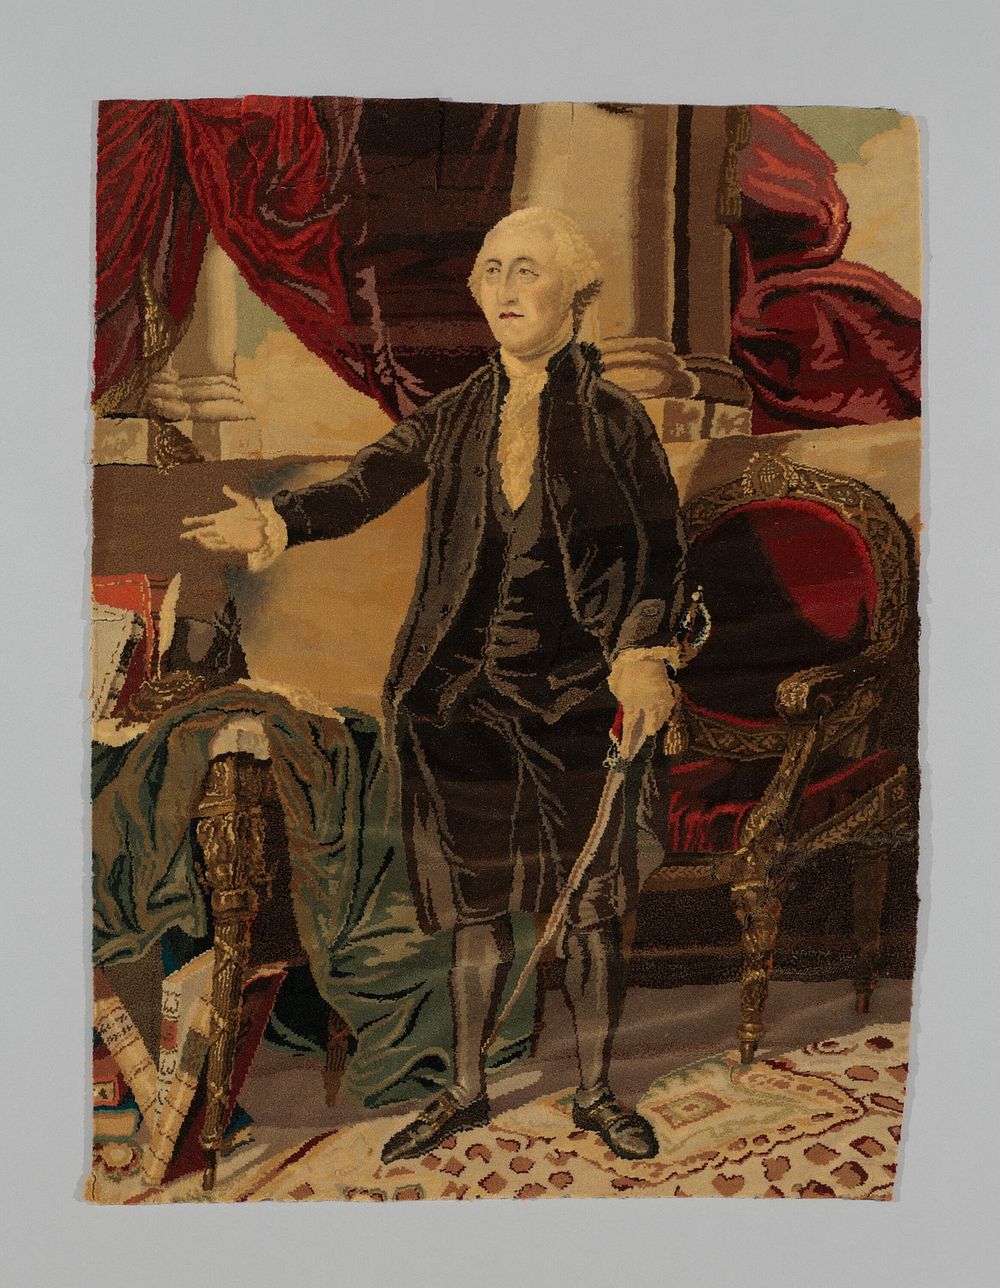 Portrait of George Washington by John Crossley & Sons Ltd. (Producer)